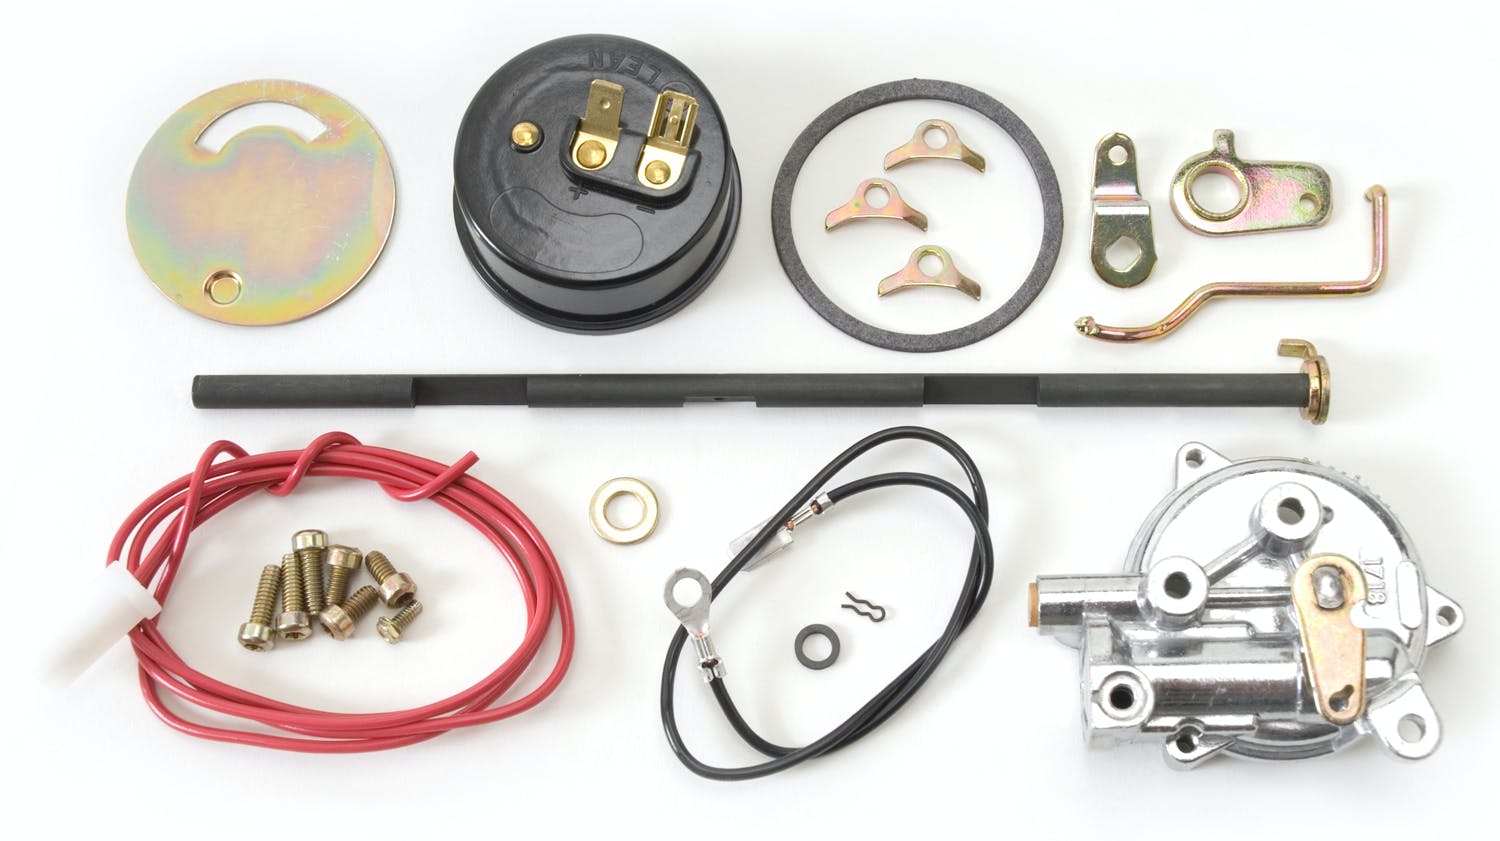 Edelbrock 1478 Electric Choke Conversion Kit for Performer Series Carburetors